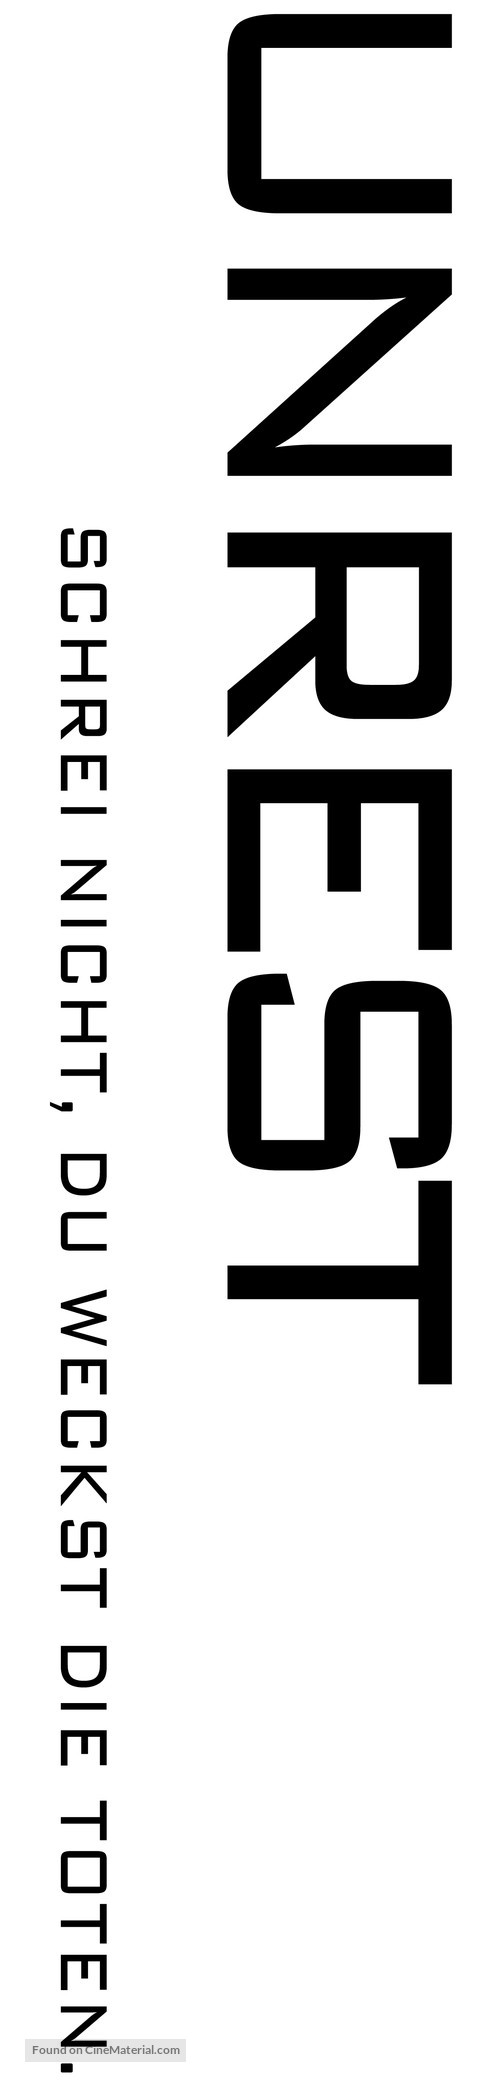 Unrest - German Logo